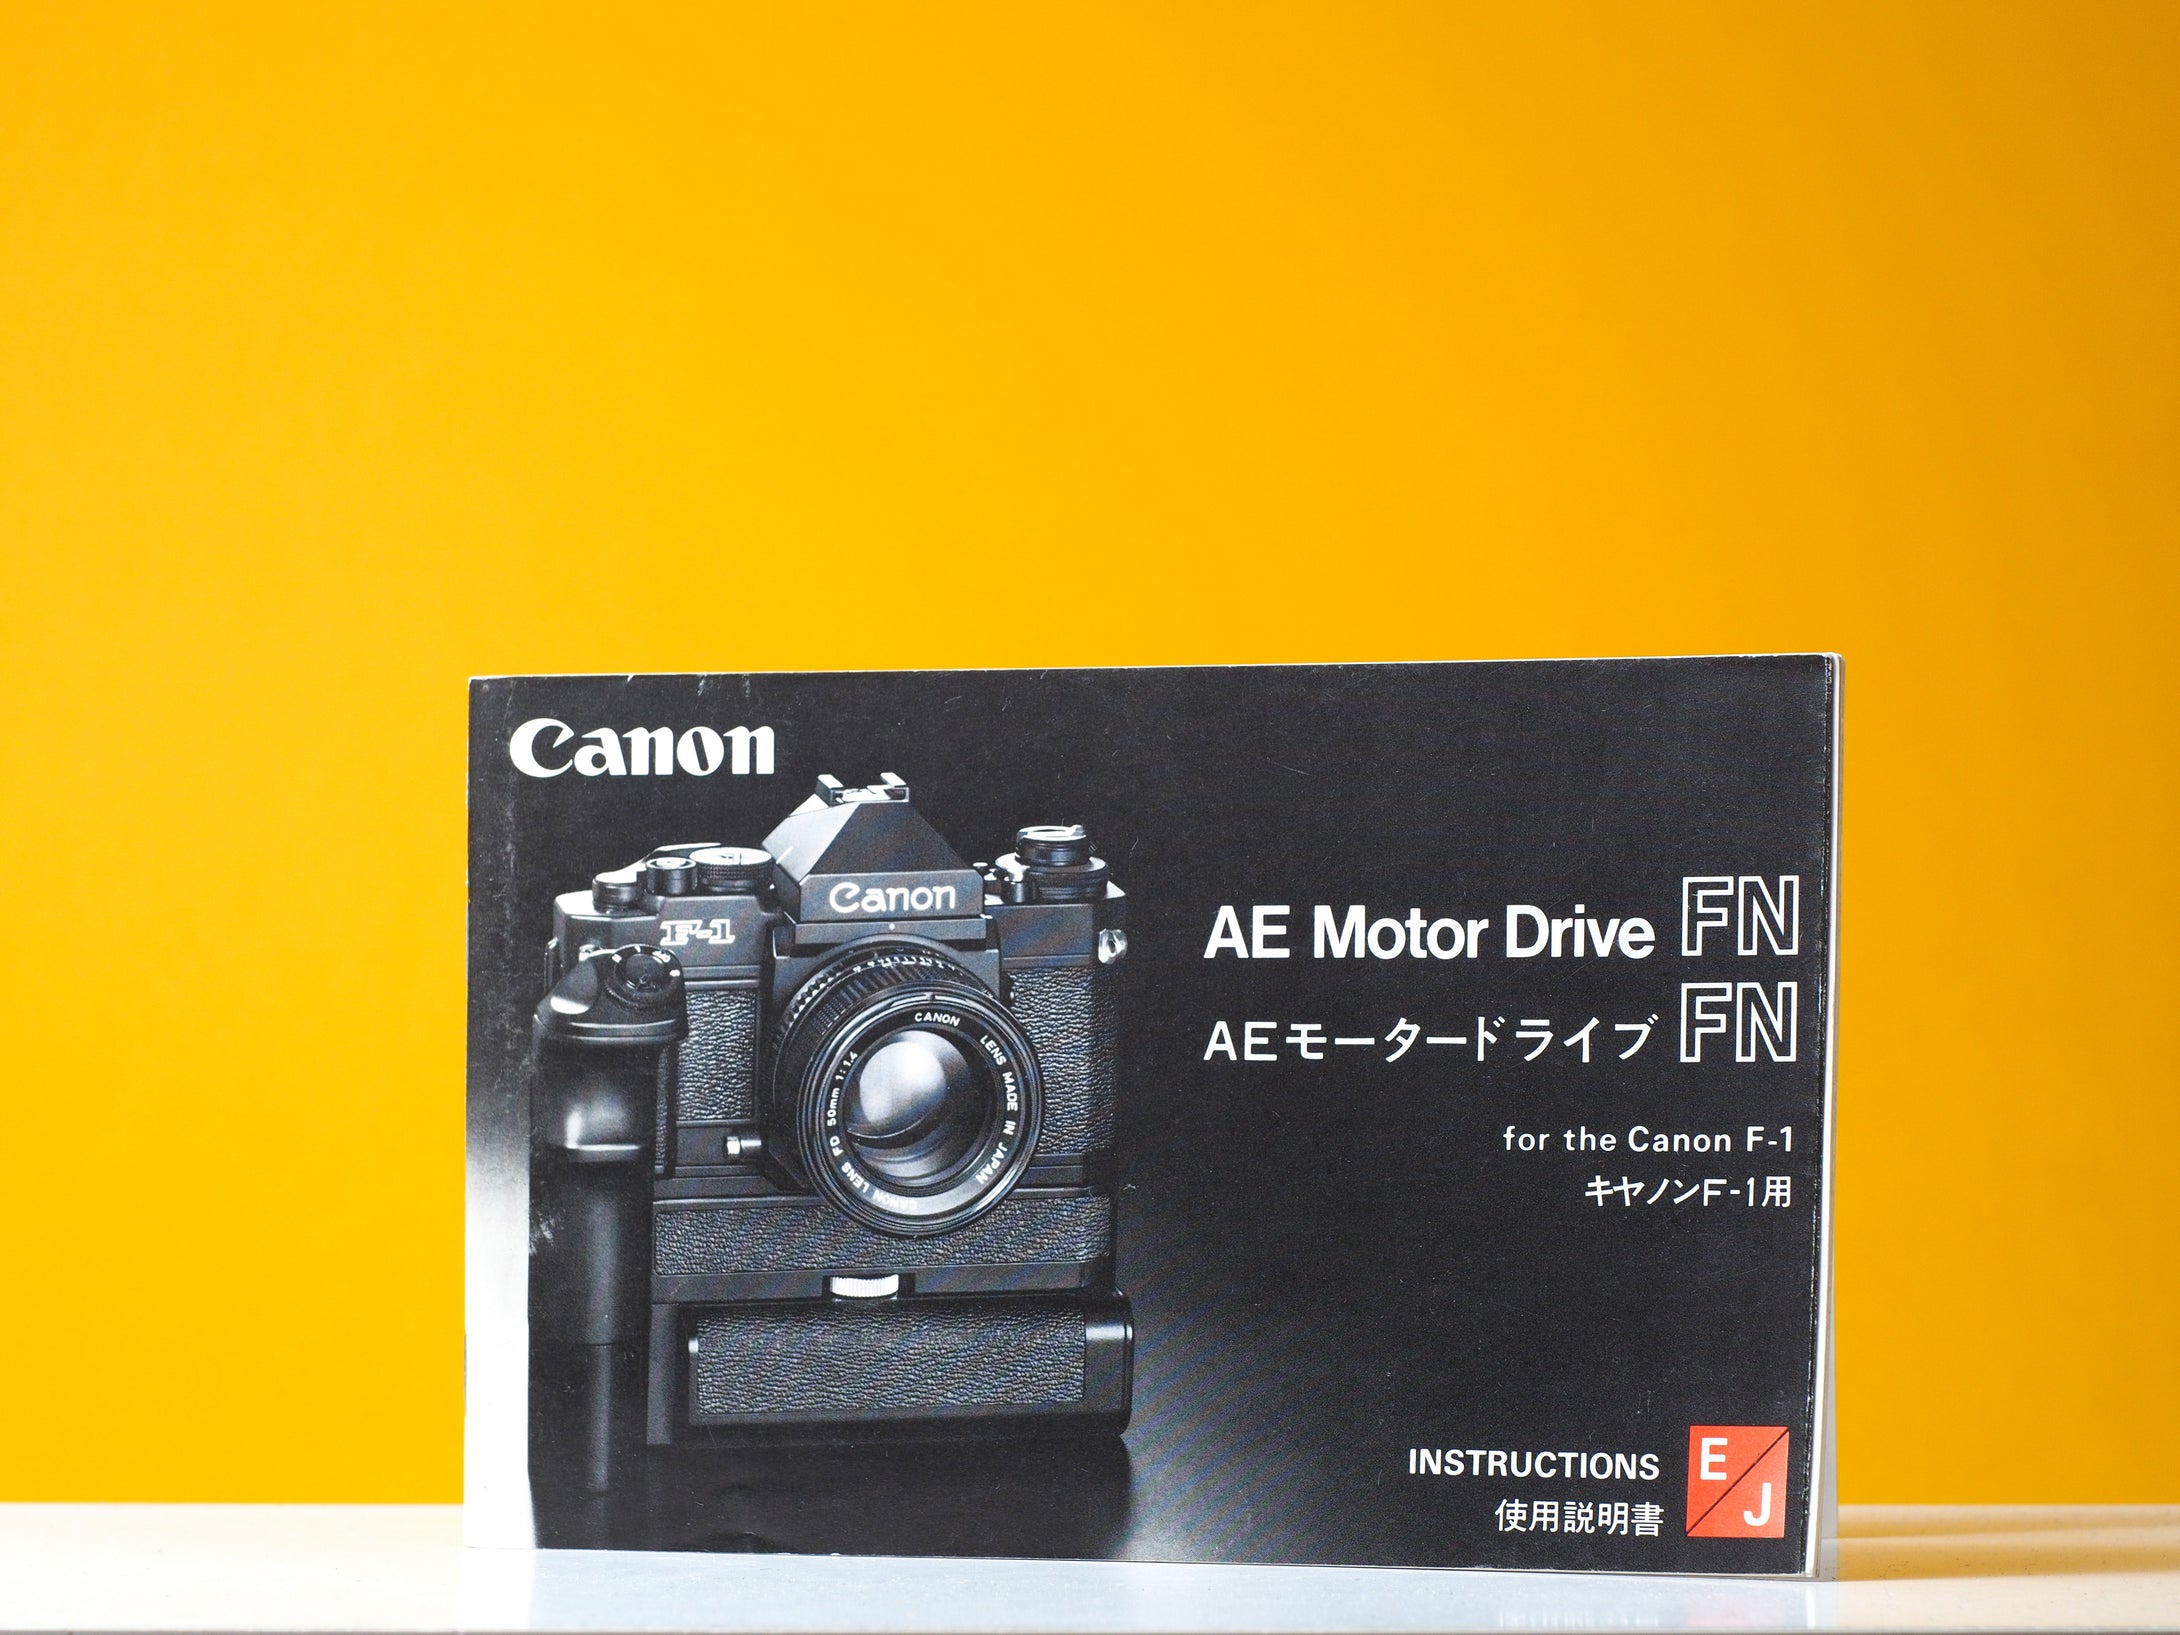 Canon AE Motor Drive FN Manual